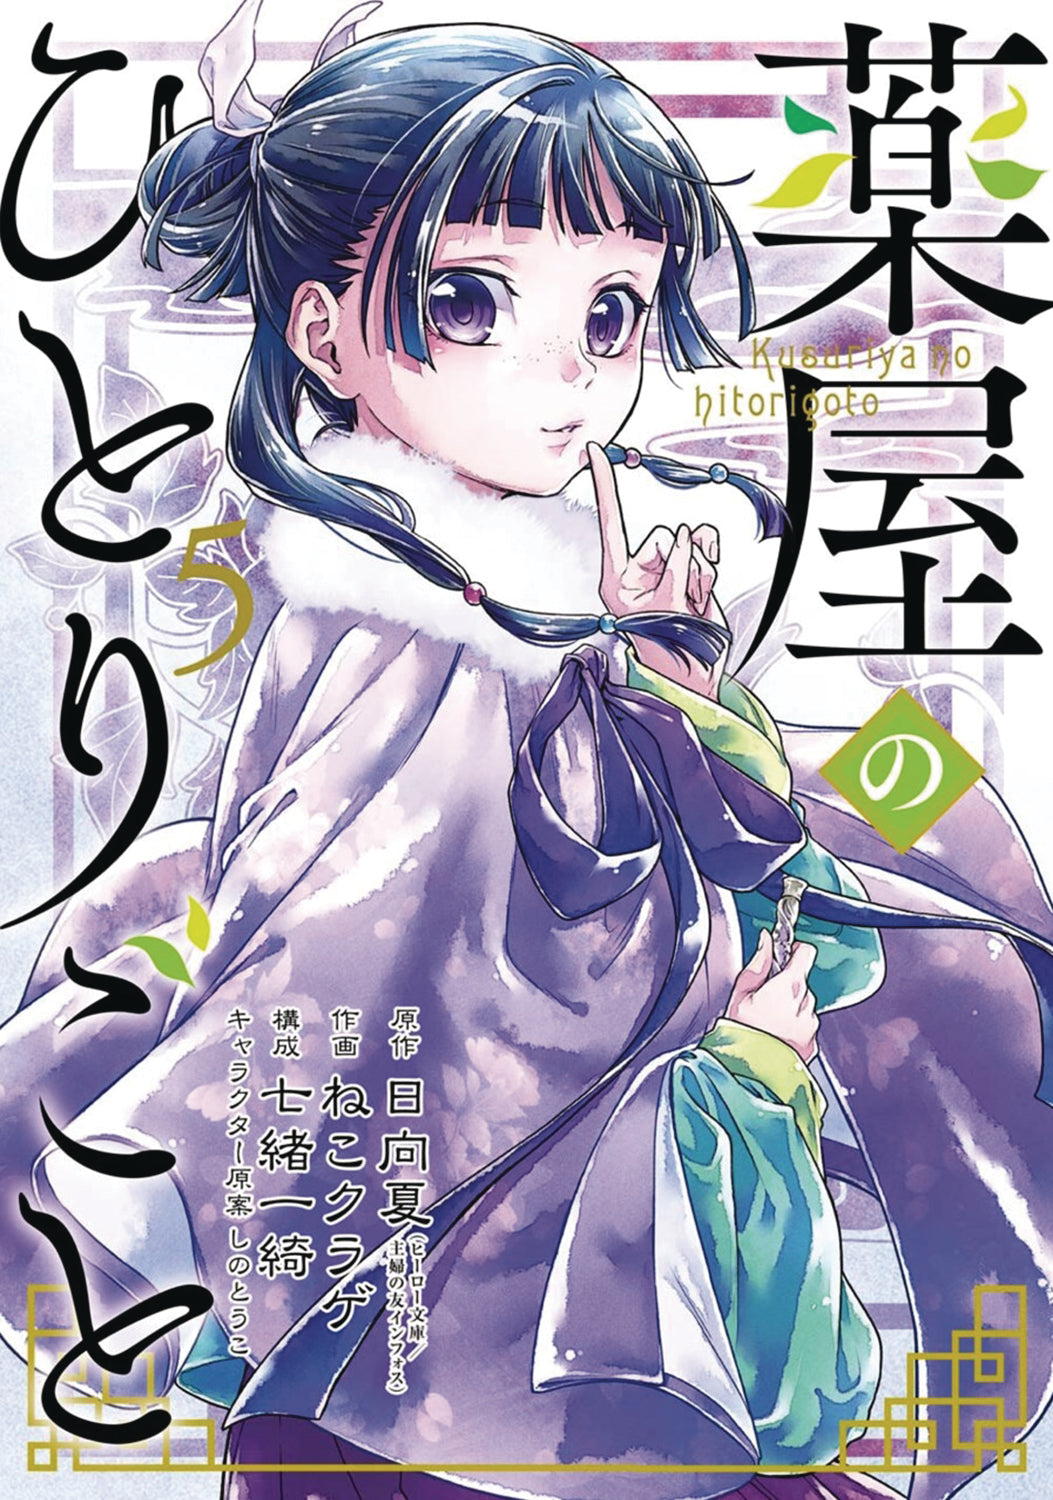 The Apothecary Diaries 06 (Manga): Hyuuga, Natsu, Nekokurage